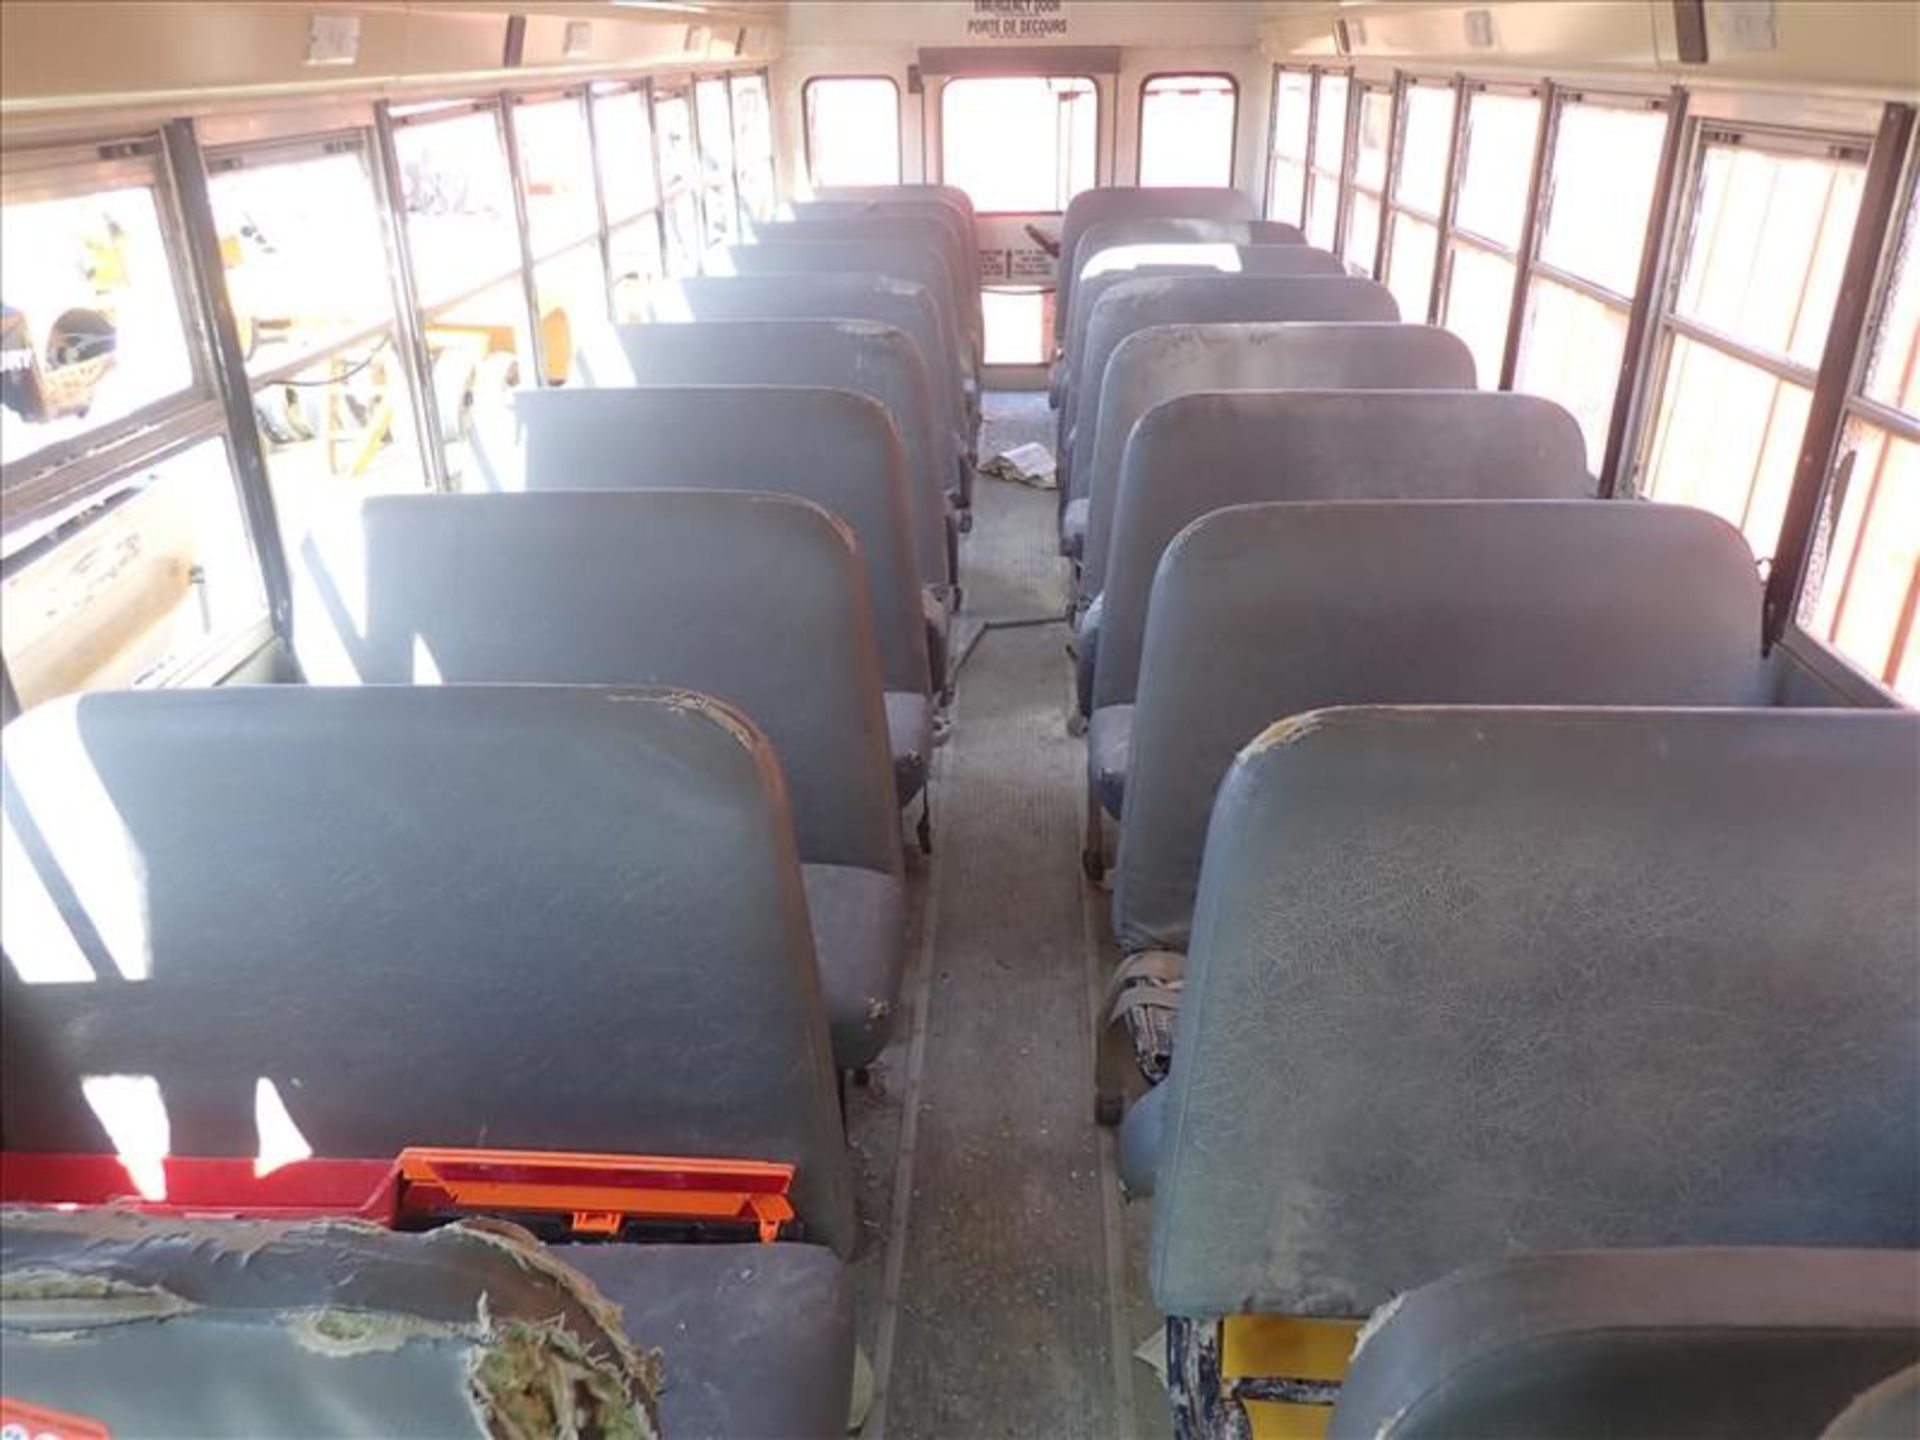 IC Corp. School Bus (DMG), VIN 4DRBUAFM78B487674 (2007), 36-passenger (Tag No. 4925) [Sea - Image 4 of 5